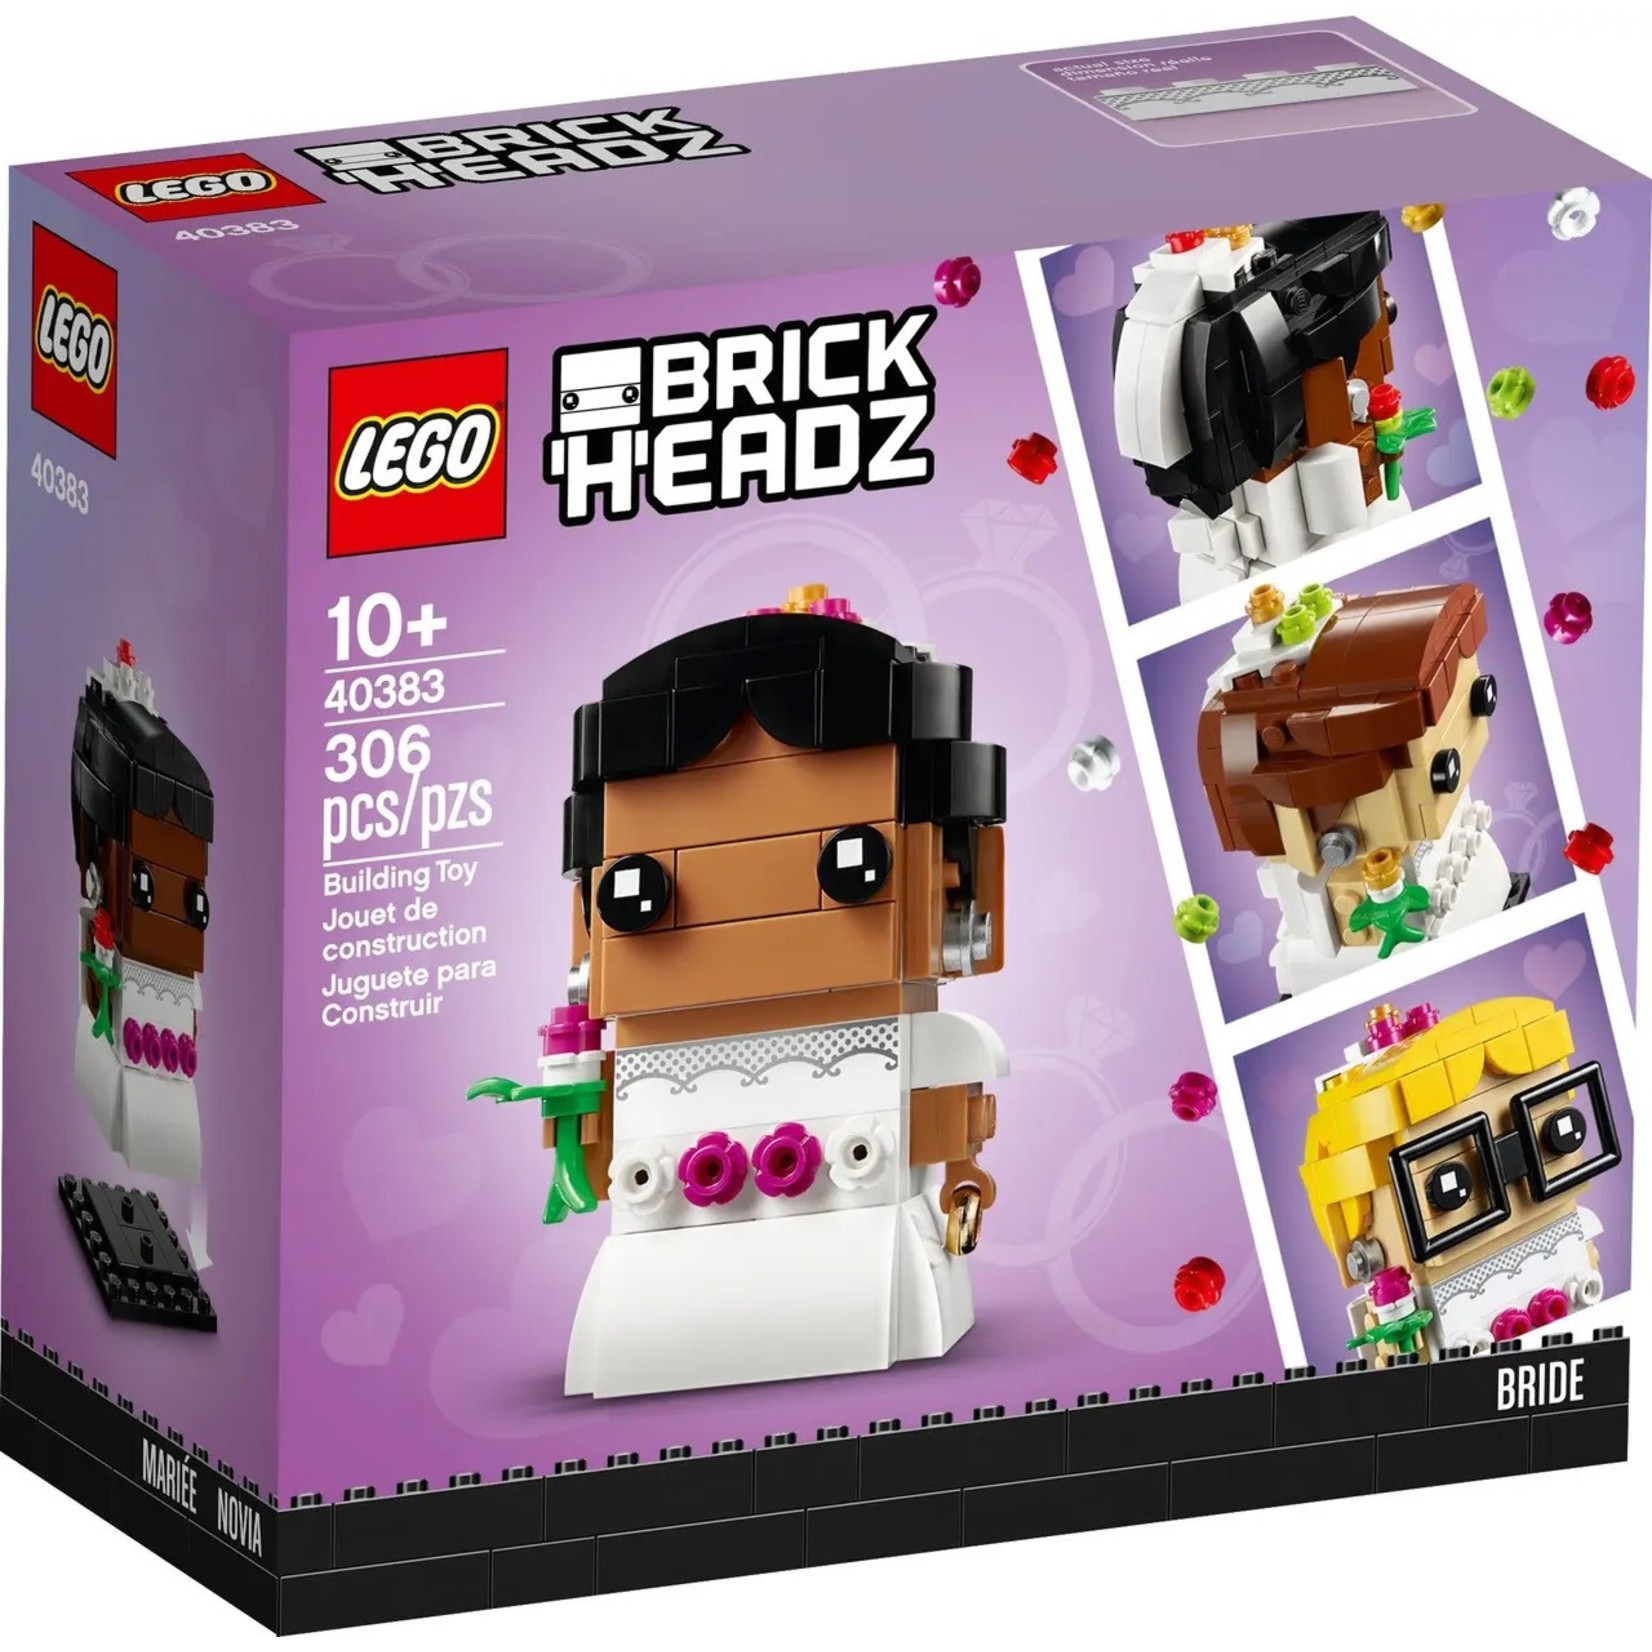 LEGO LEGO Brickheadz Bride Set 40383